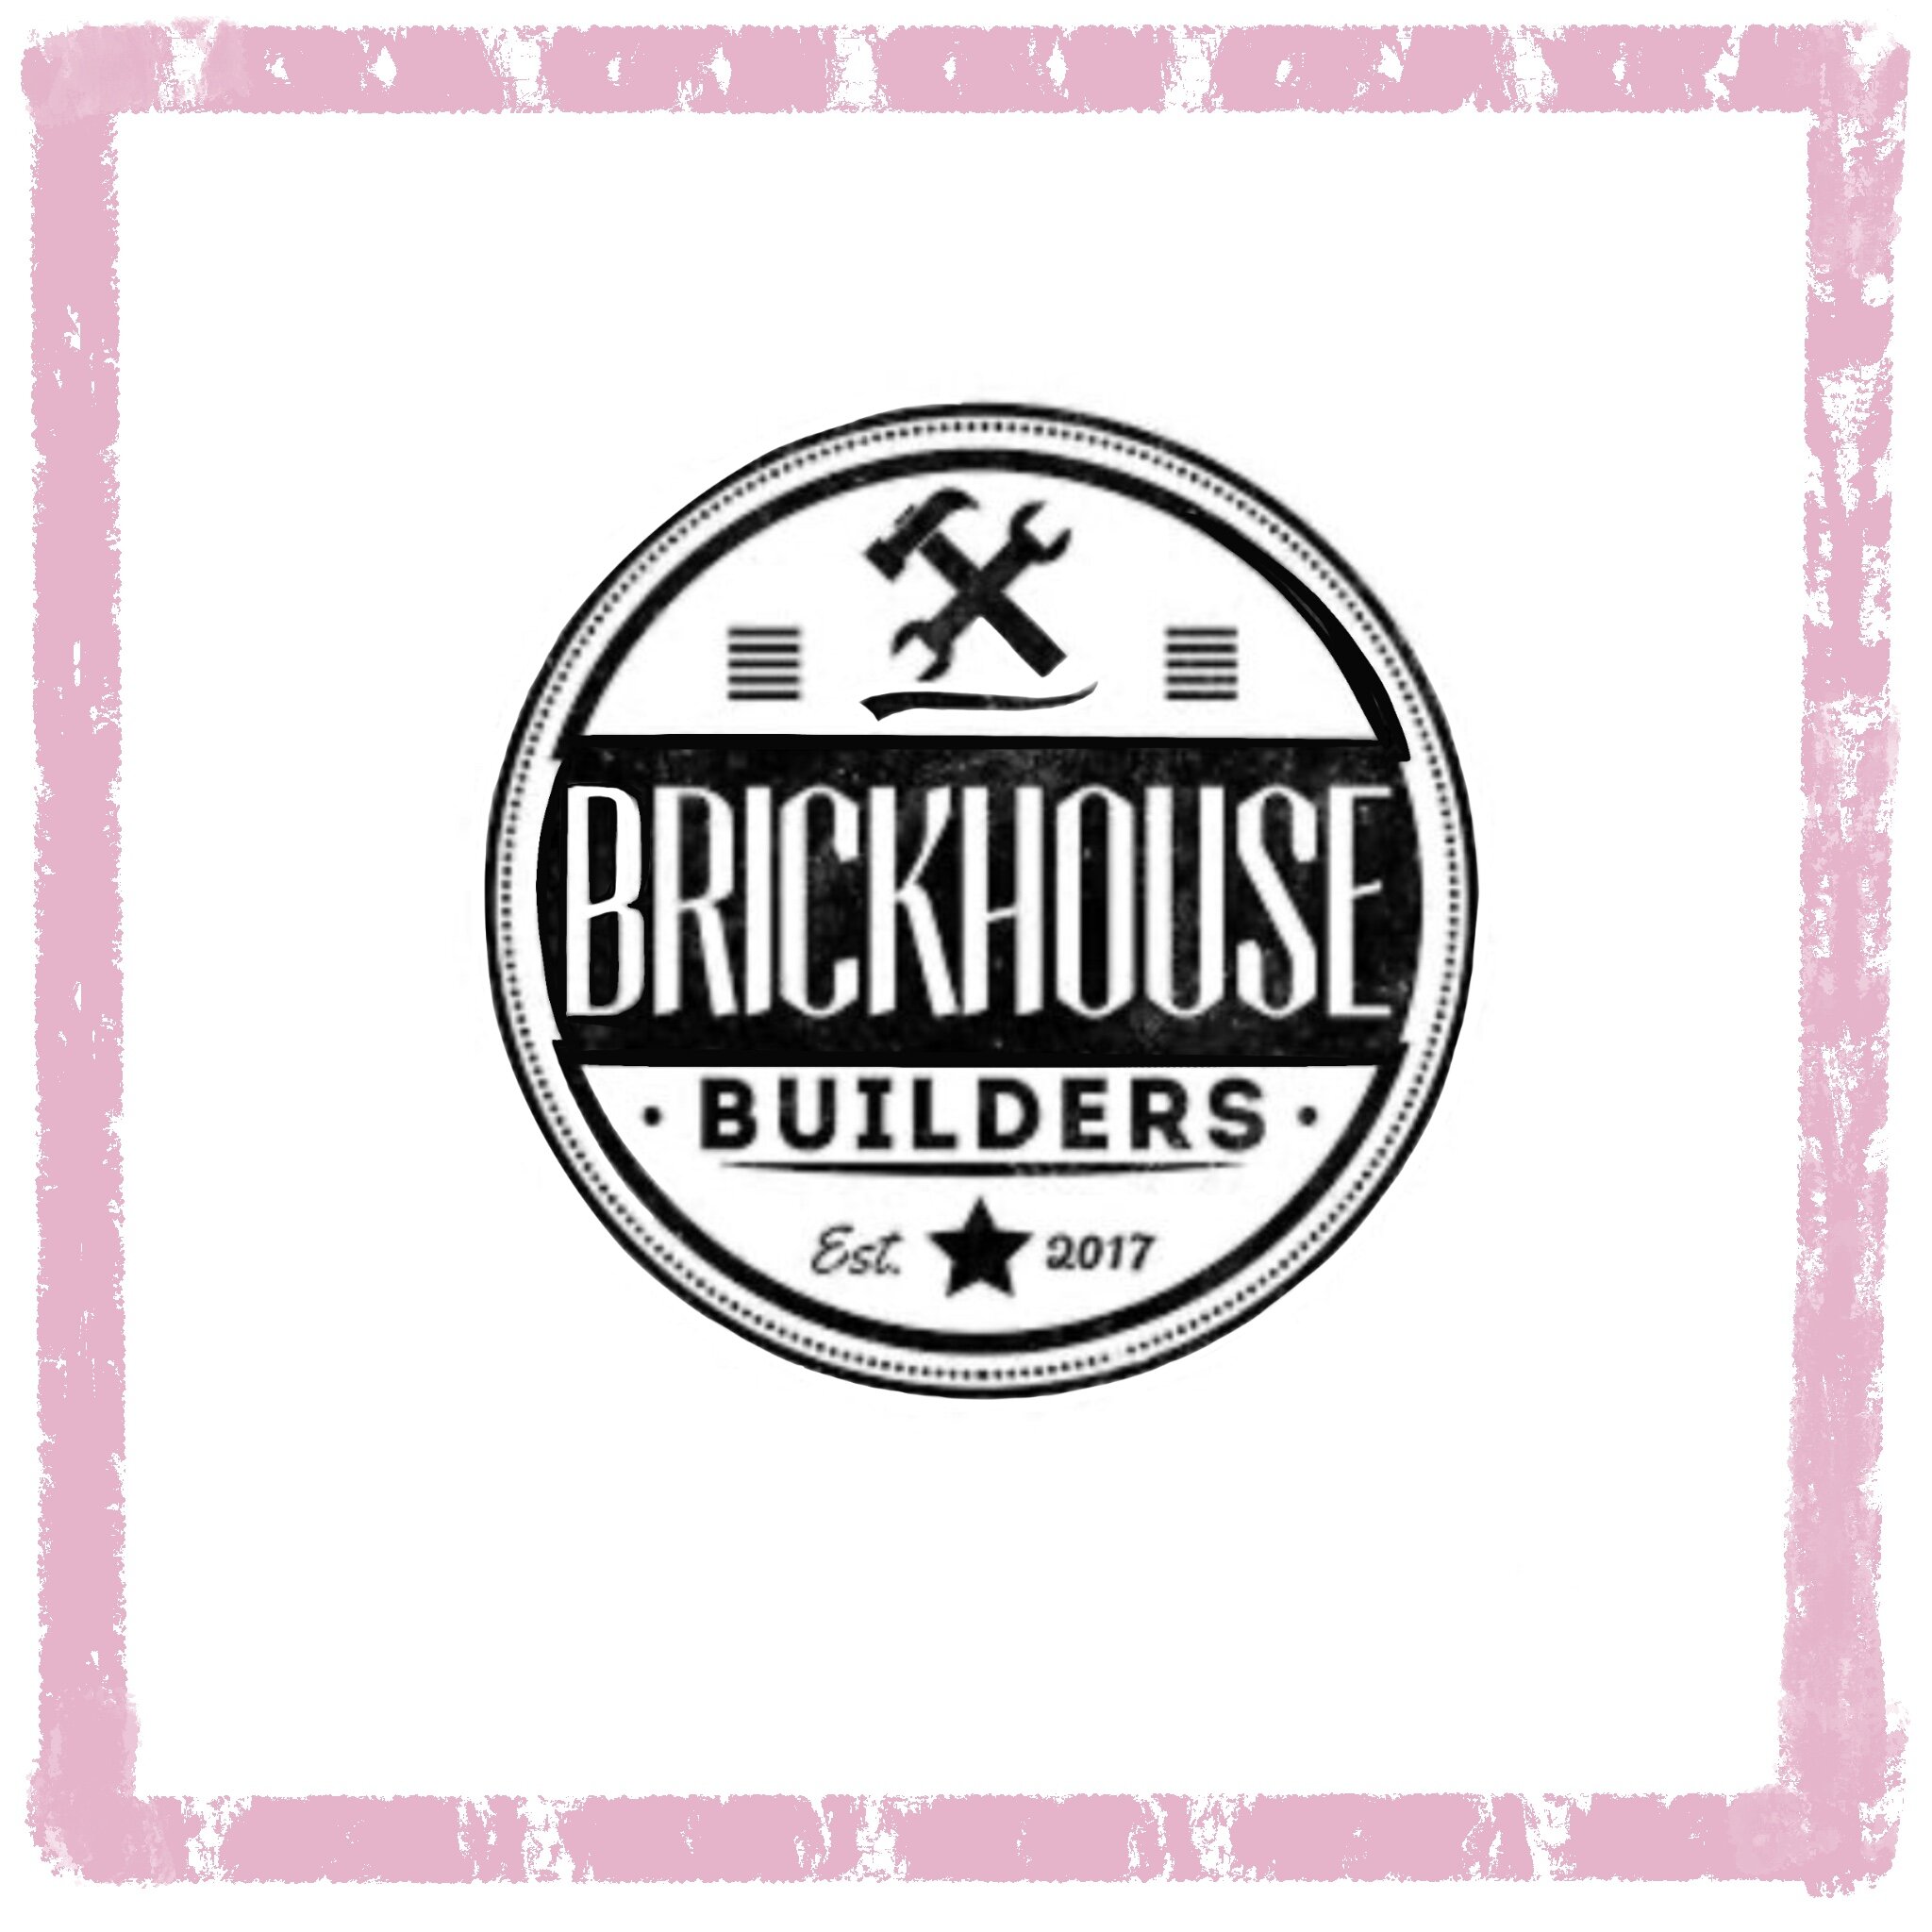 Brickhouse.client.jpg